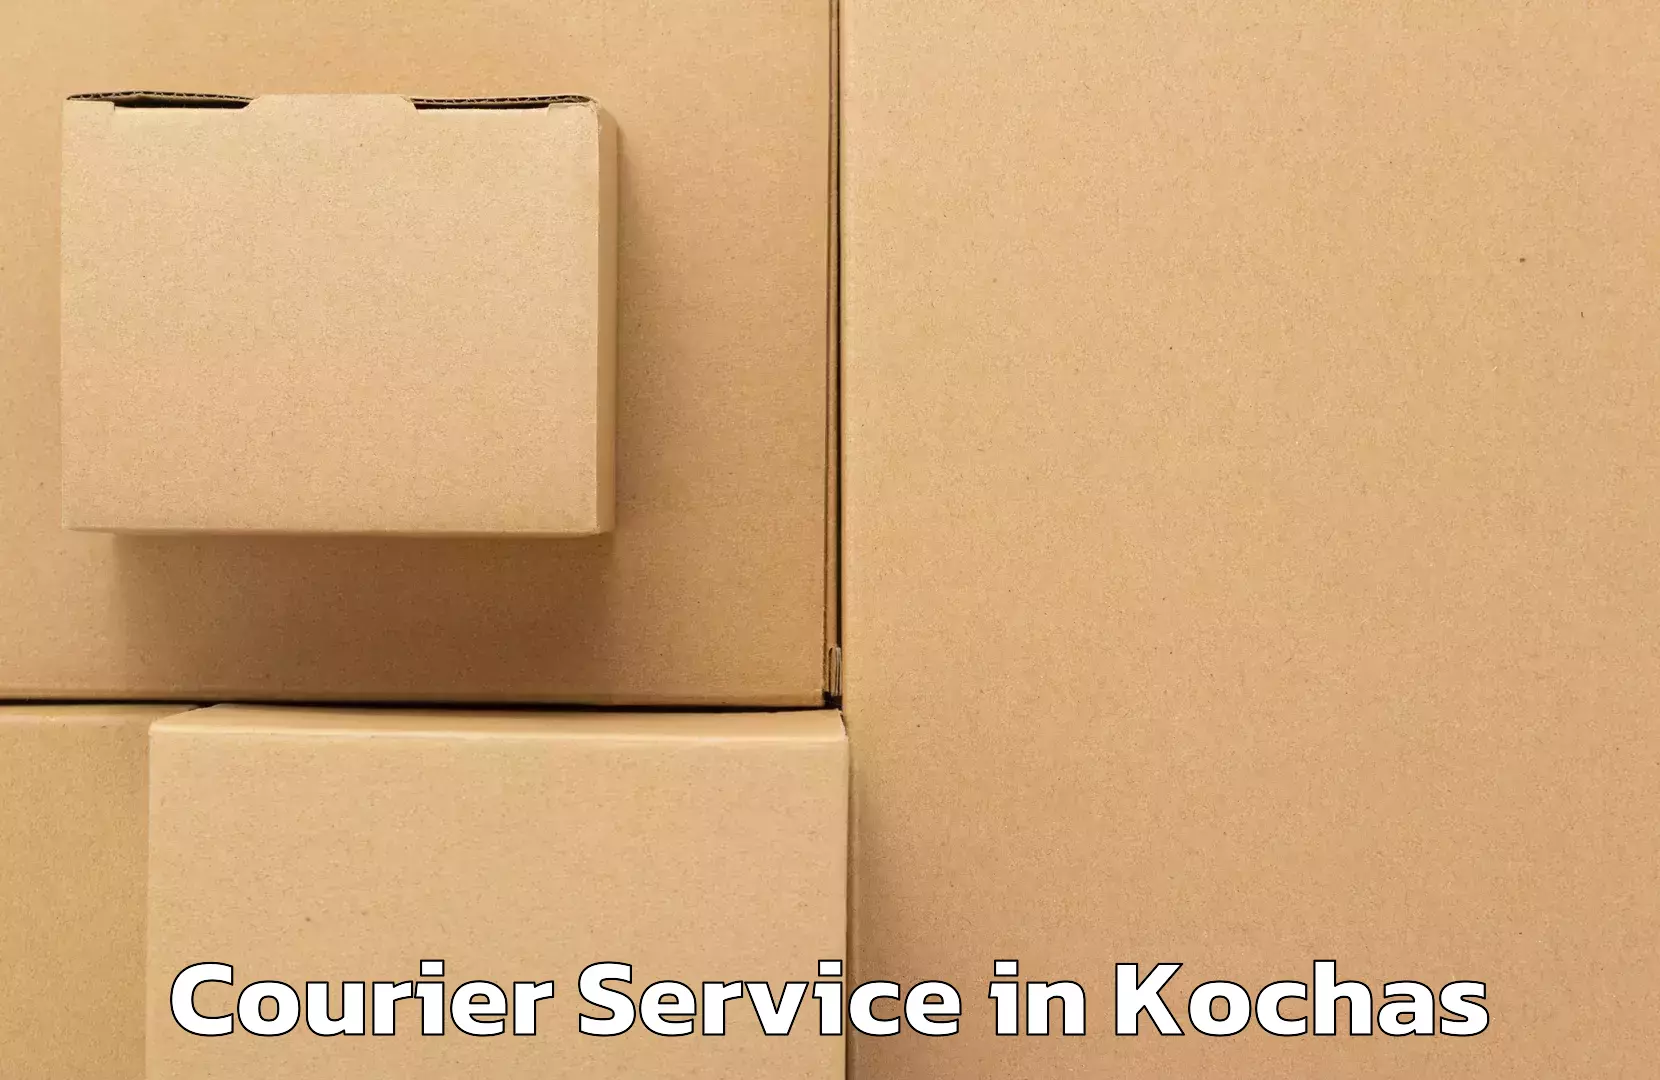 Enhanced shipping experience in Kochas